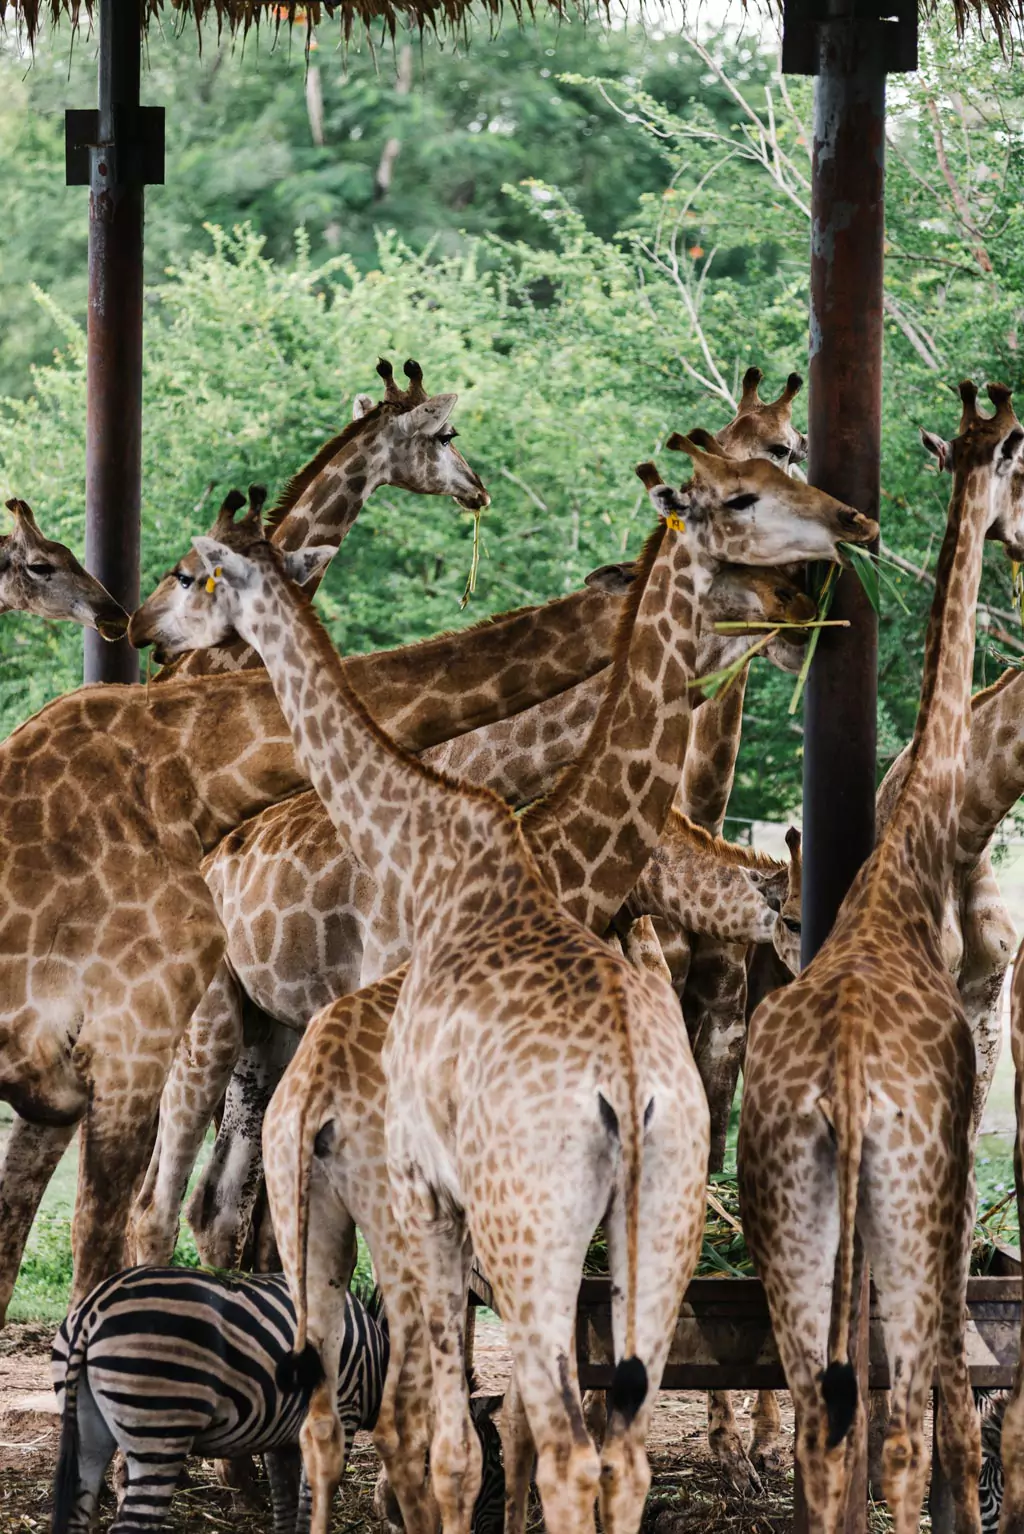 Giraffes eating food